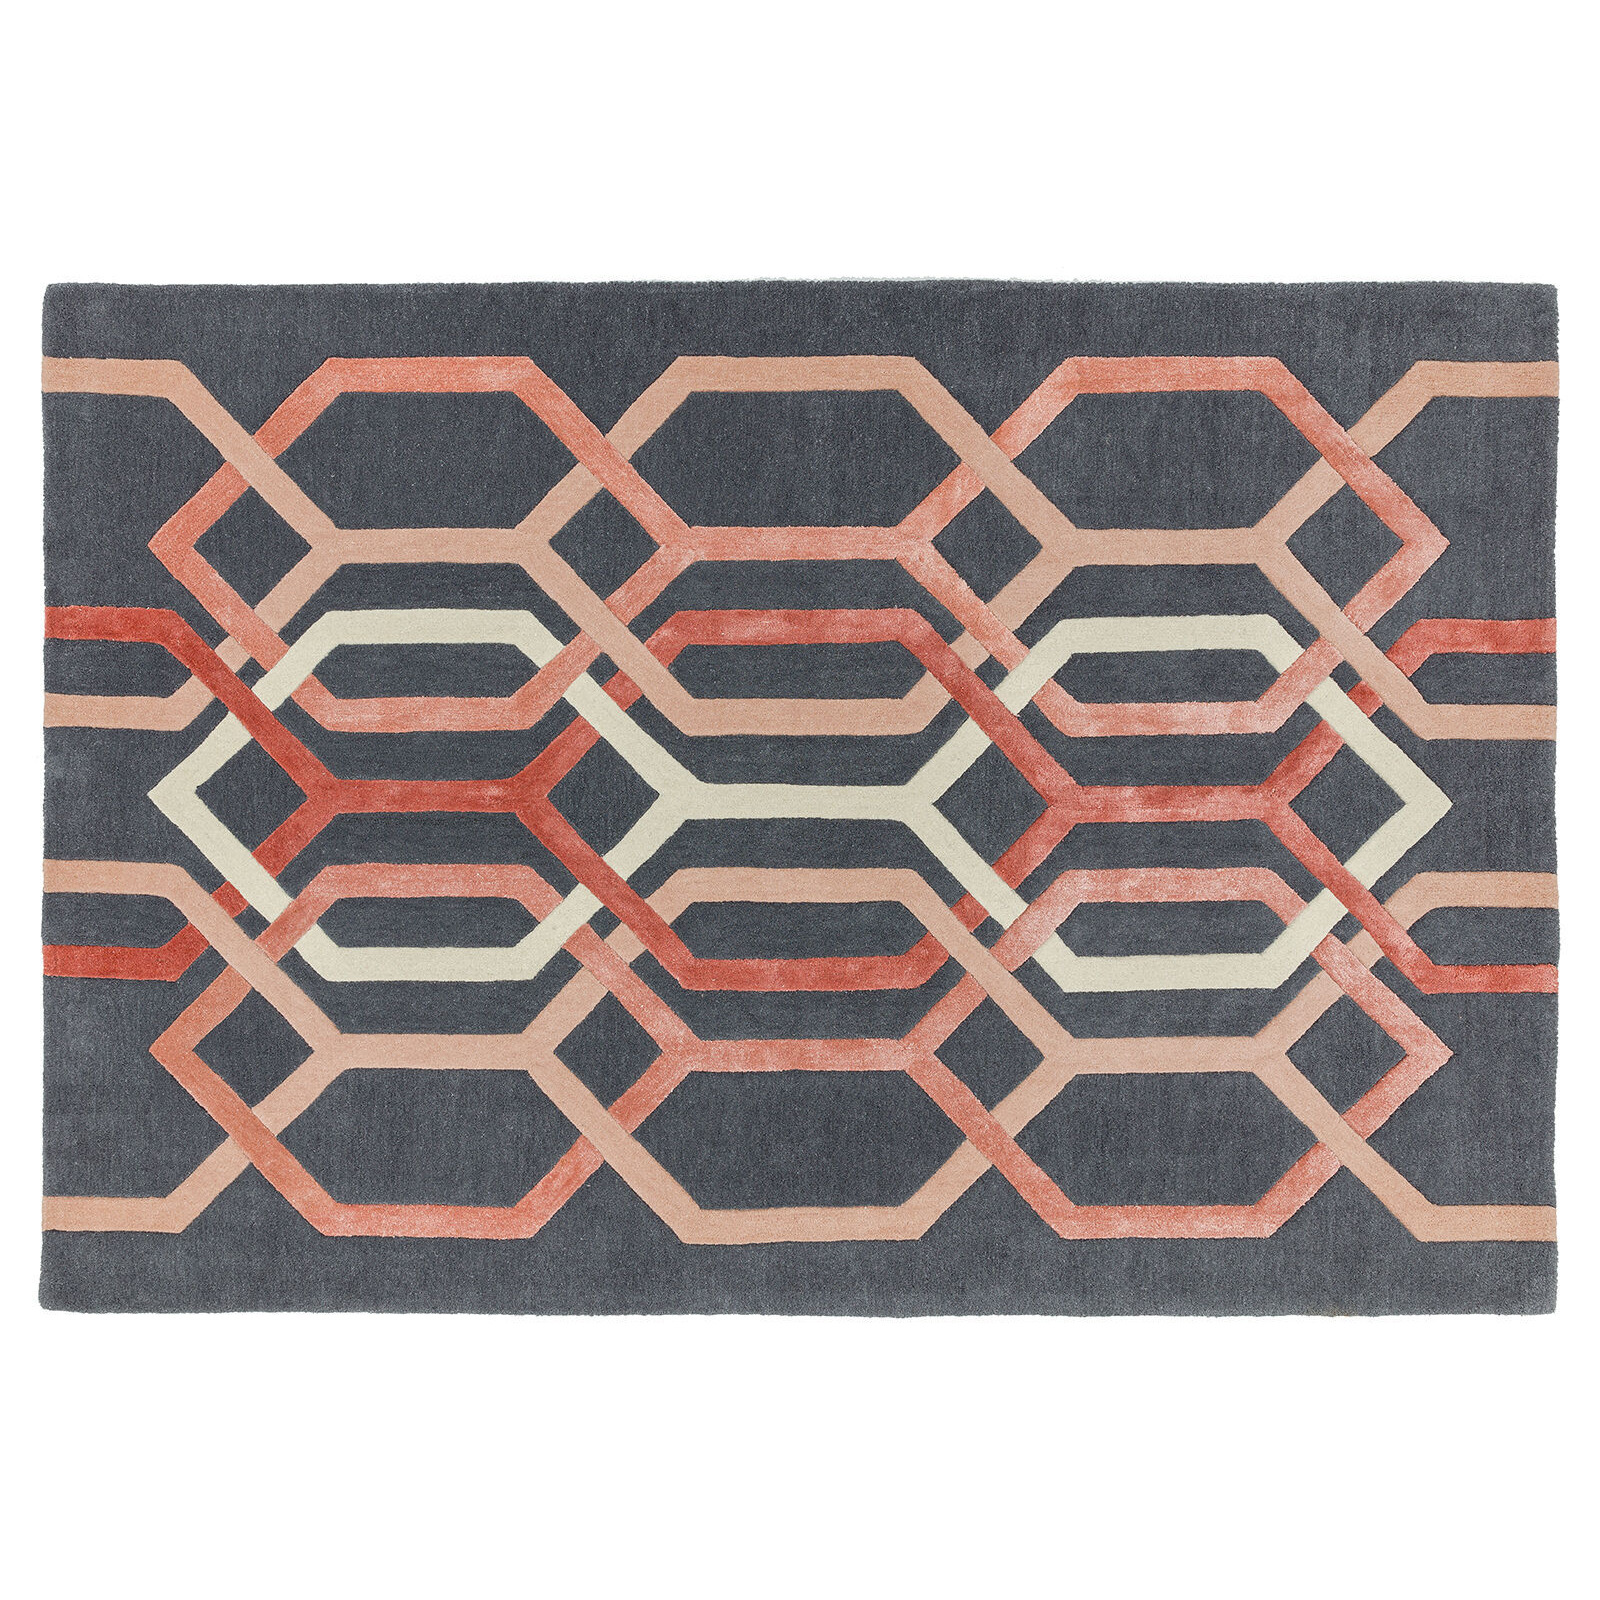 Geom Wool Rug, 160X230 cm, Charcoal